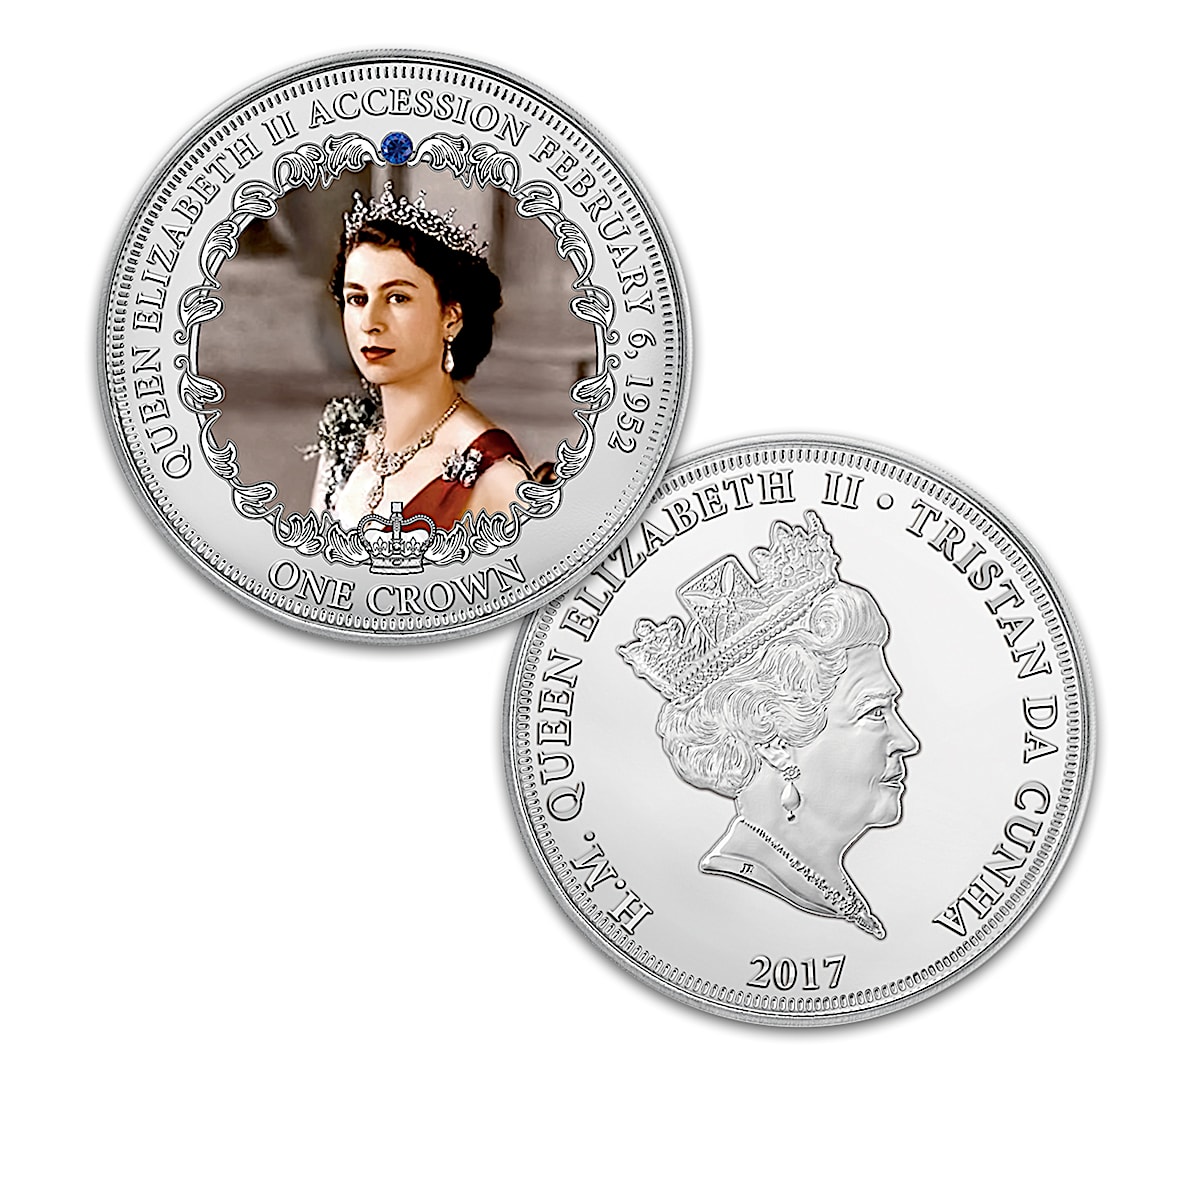 Queen Elizabeth II Rare Coins Collection - Do You Have This Coins? 